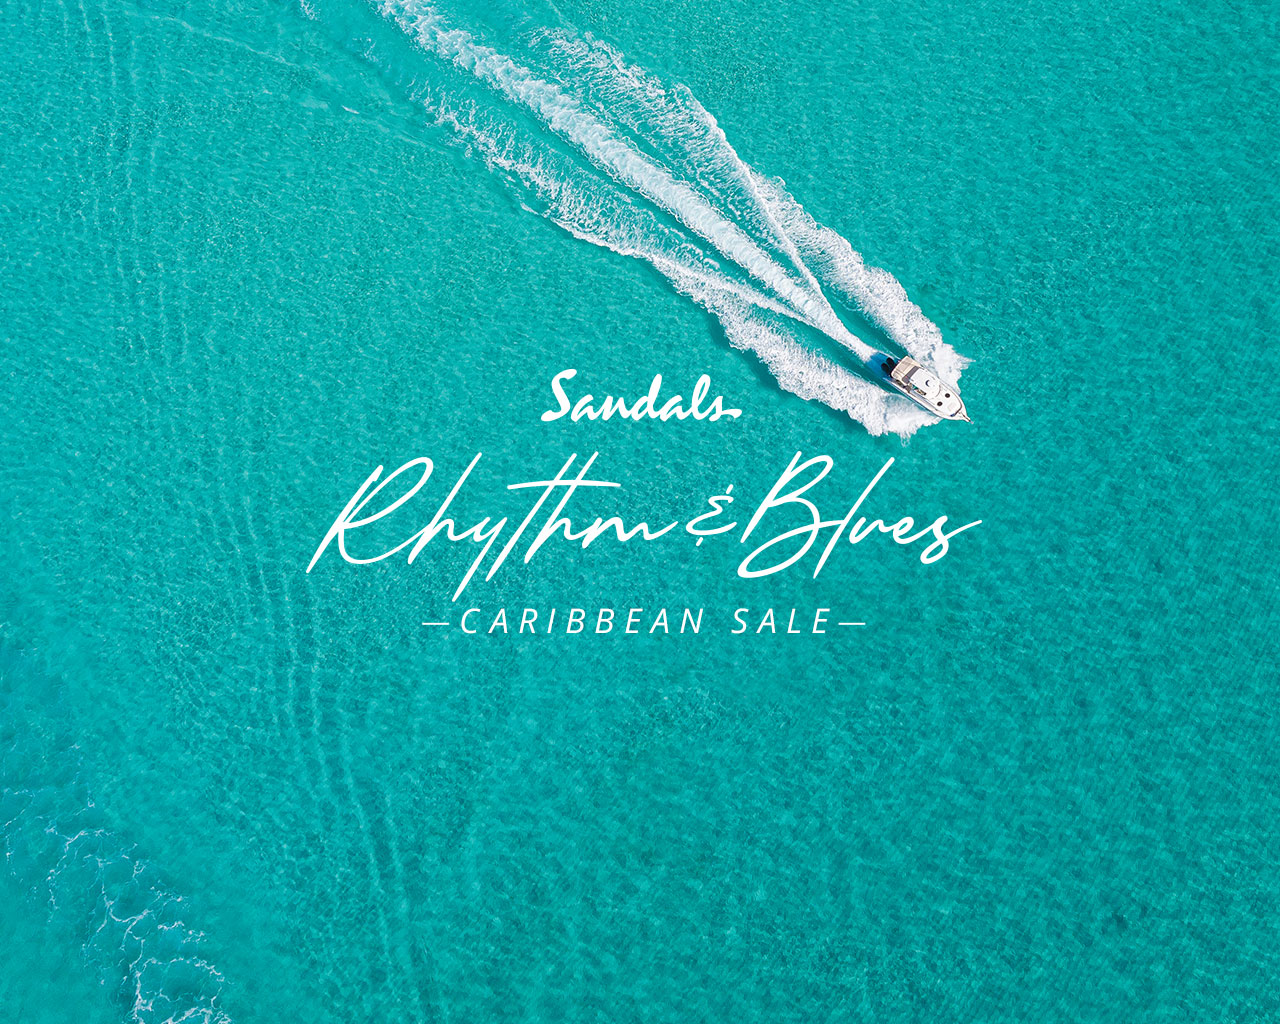 SANDALS® Resorts Rhythm And Blues Caribbean Sale